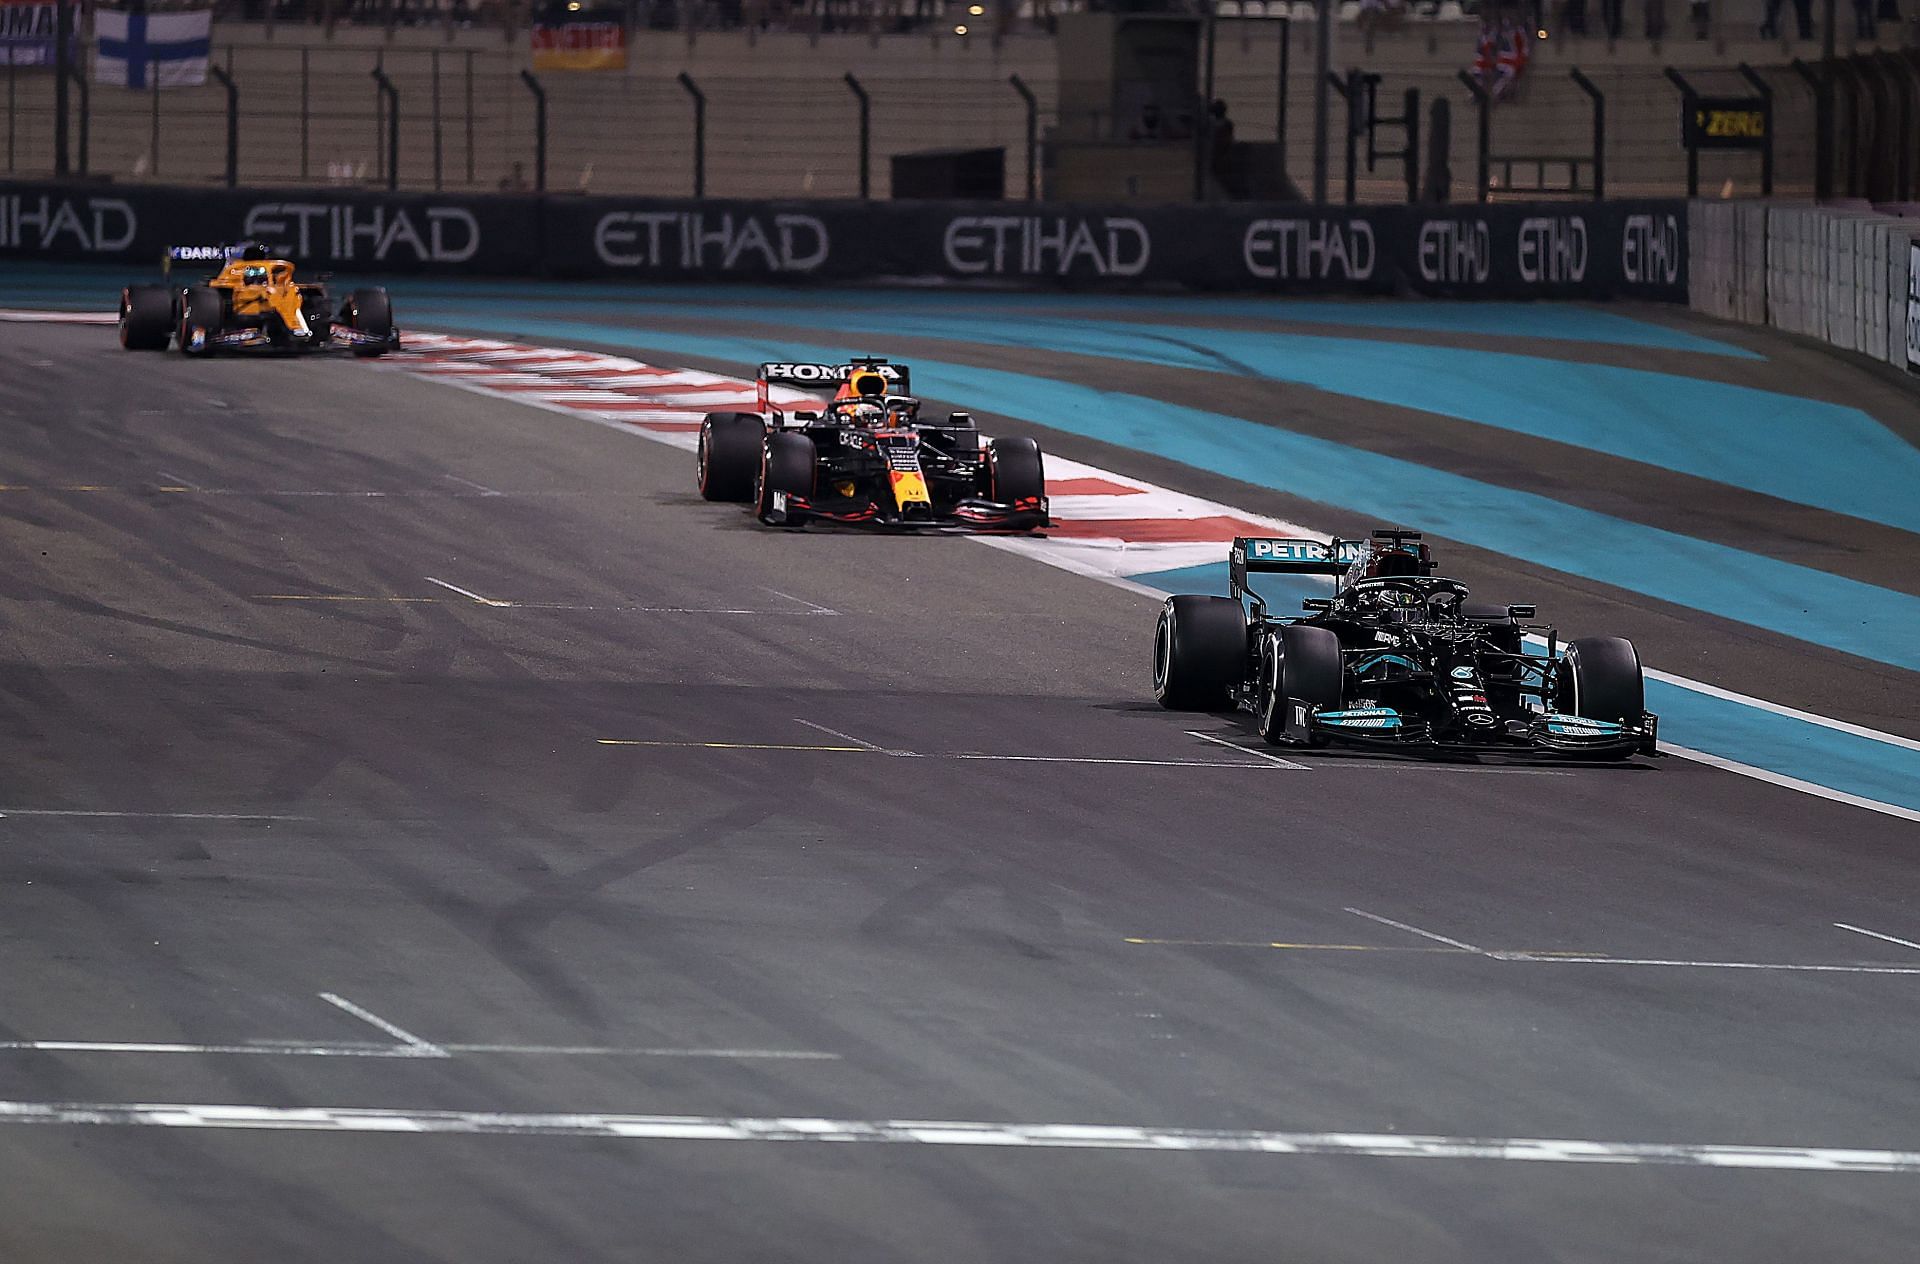 Lewis Hamilton (#44) Mercedes-AMG Petronas W12 leads Max Verstappen (#33) Red Bull Racing Honda RB16B, on lap 58 of the 2021 Abu Dhabi Grand Prix